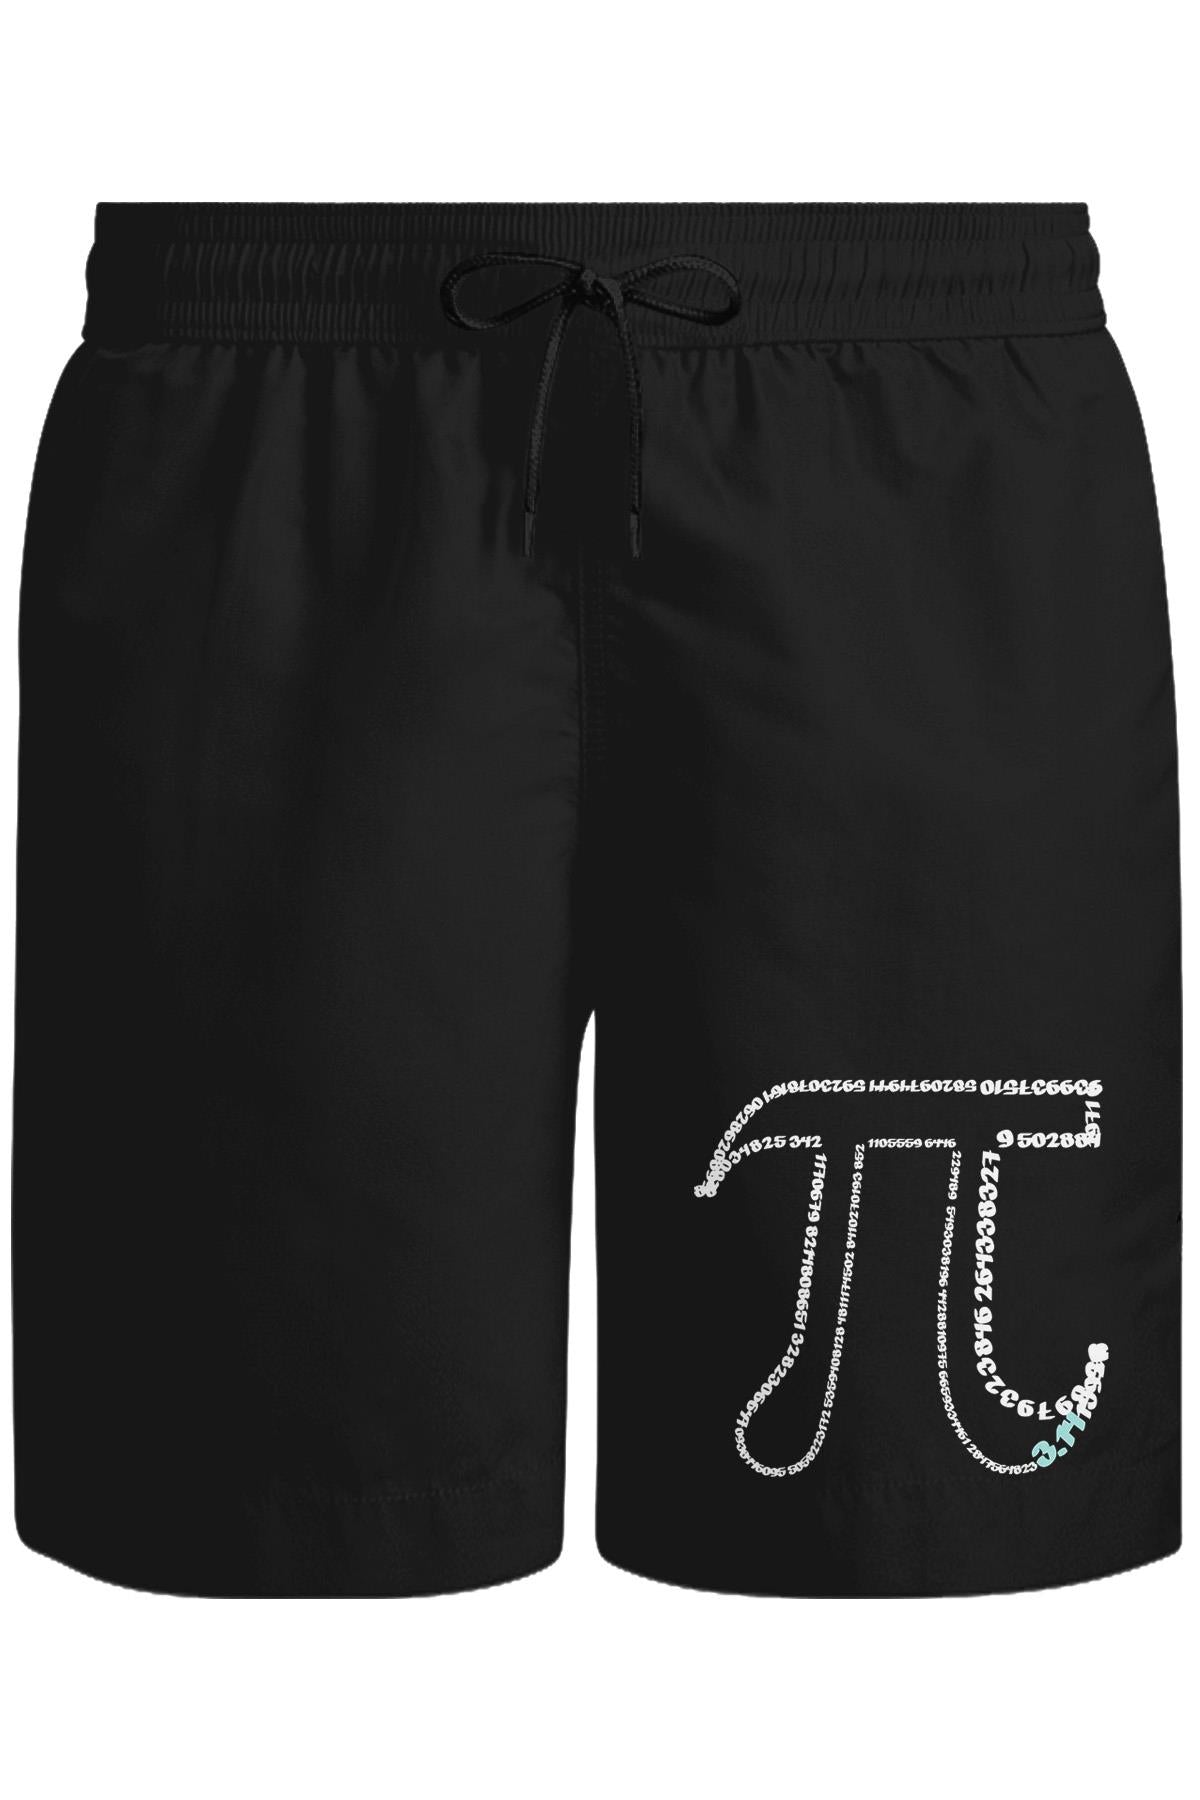 Mathematics - Pi XIV Unisex Black Shorts